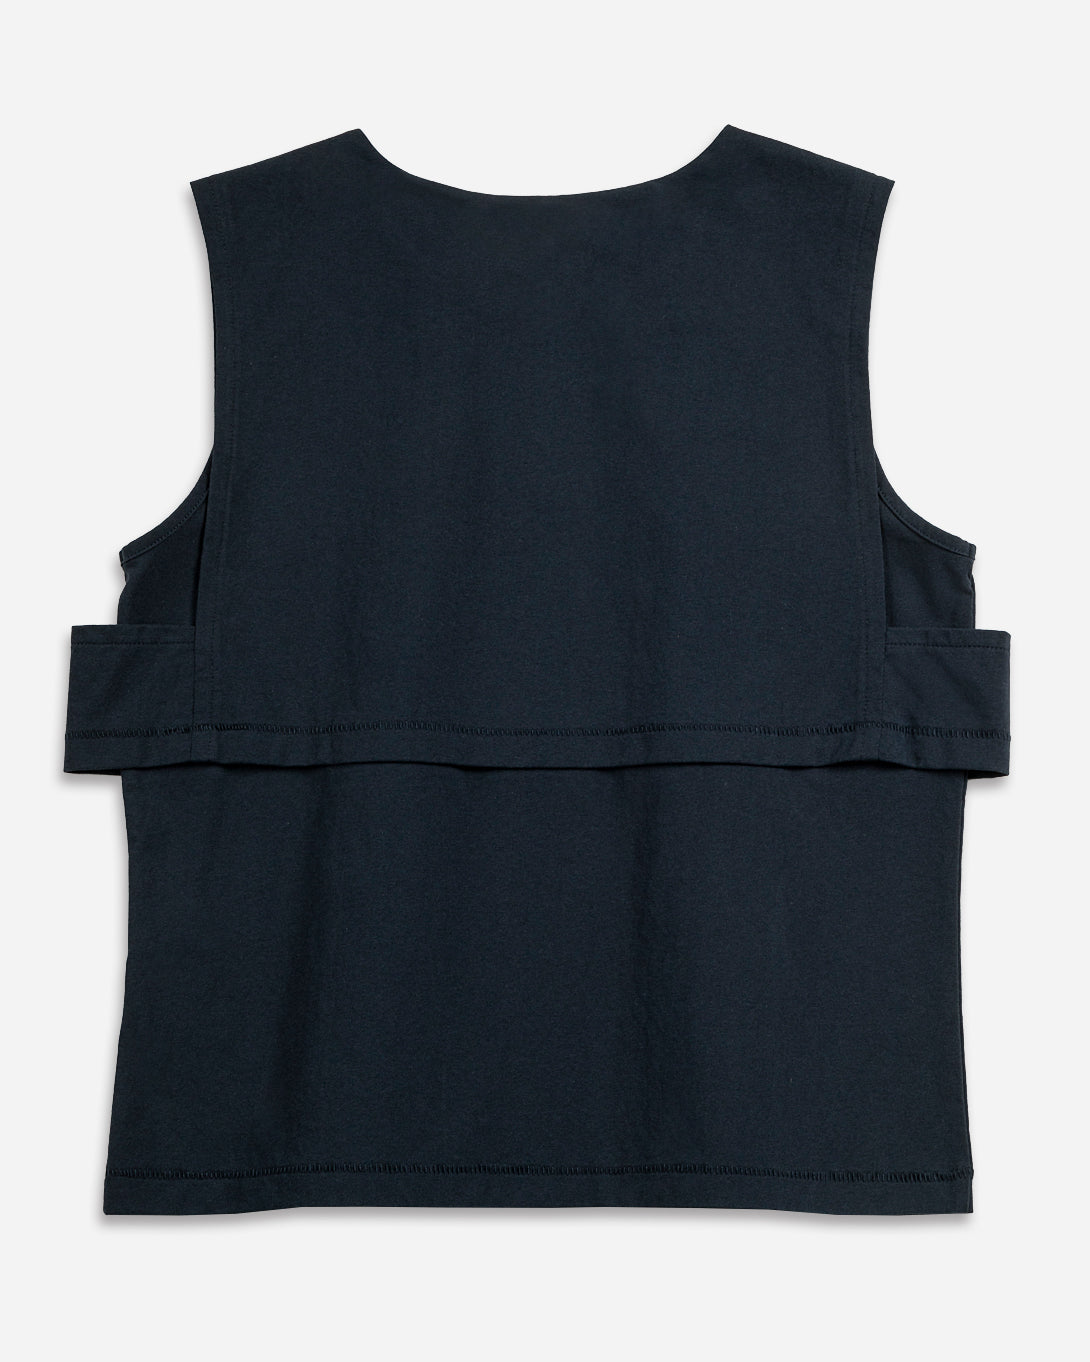 Navy Blazer Double Layer Tank Womens Sleeveless Summer Shirt